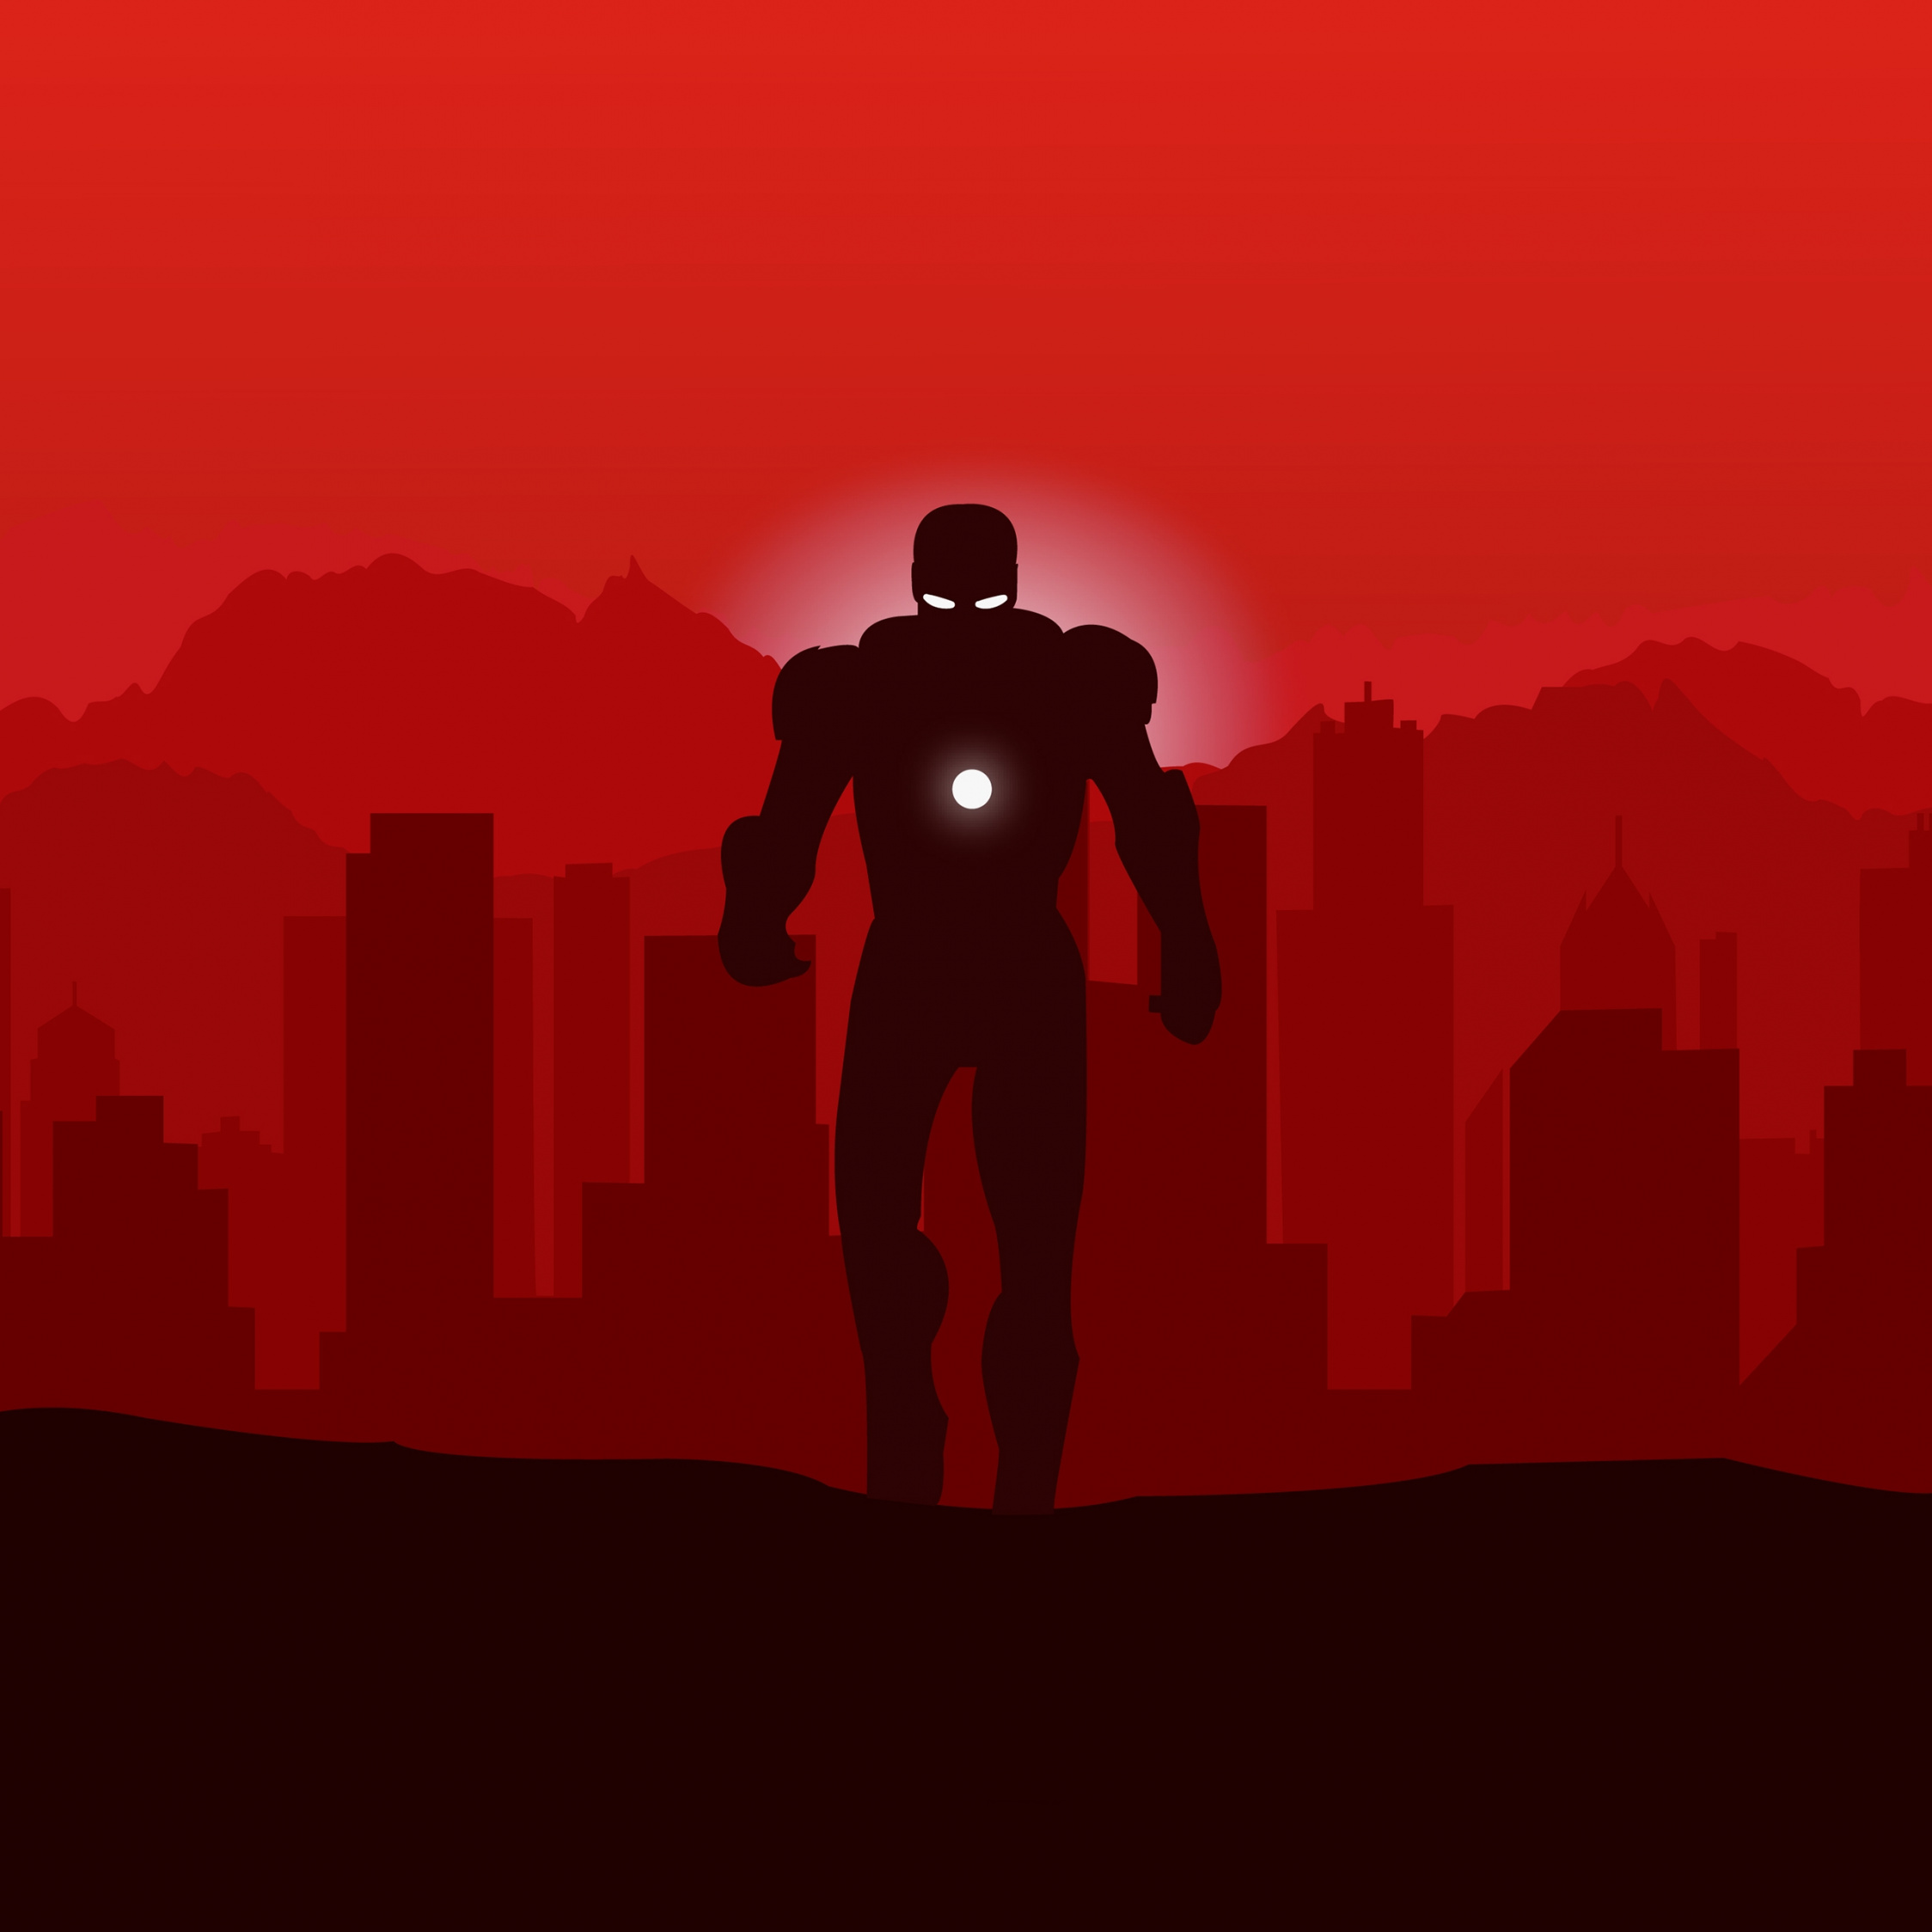 Download Marvel Heroes, Iron man, superhero, minimalist wallpaper, 2248x iPad Air, iPad Air iPad iPad iPad mini iPad mini 3